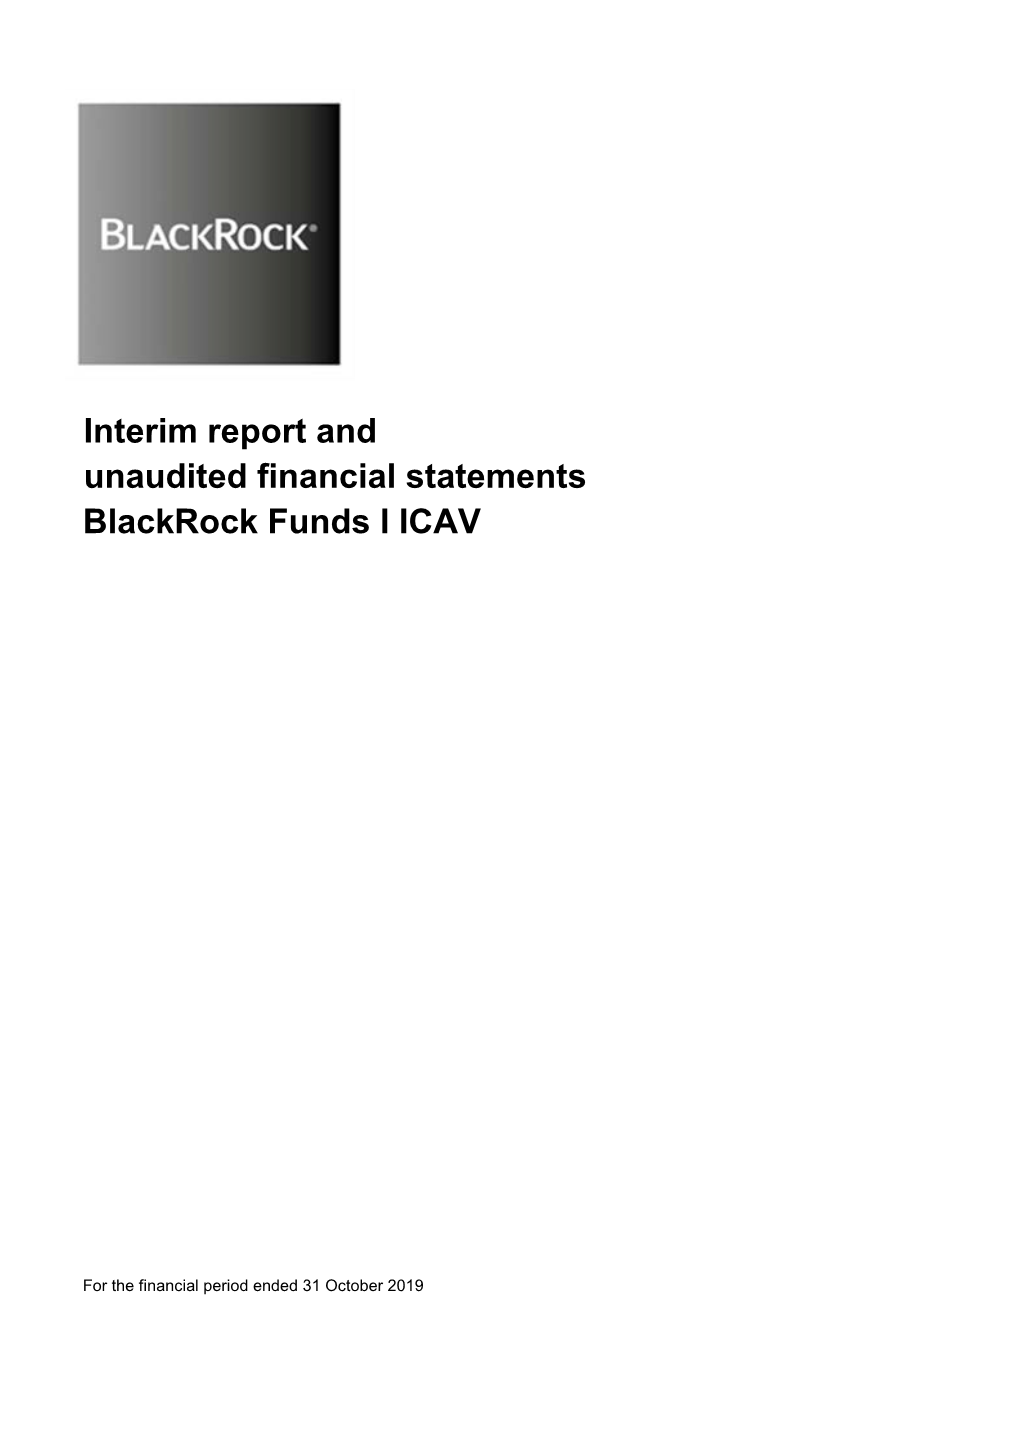 Interim Report and Unaudited Financial Statements Blackrock Funds I ICAV